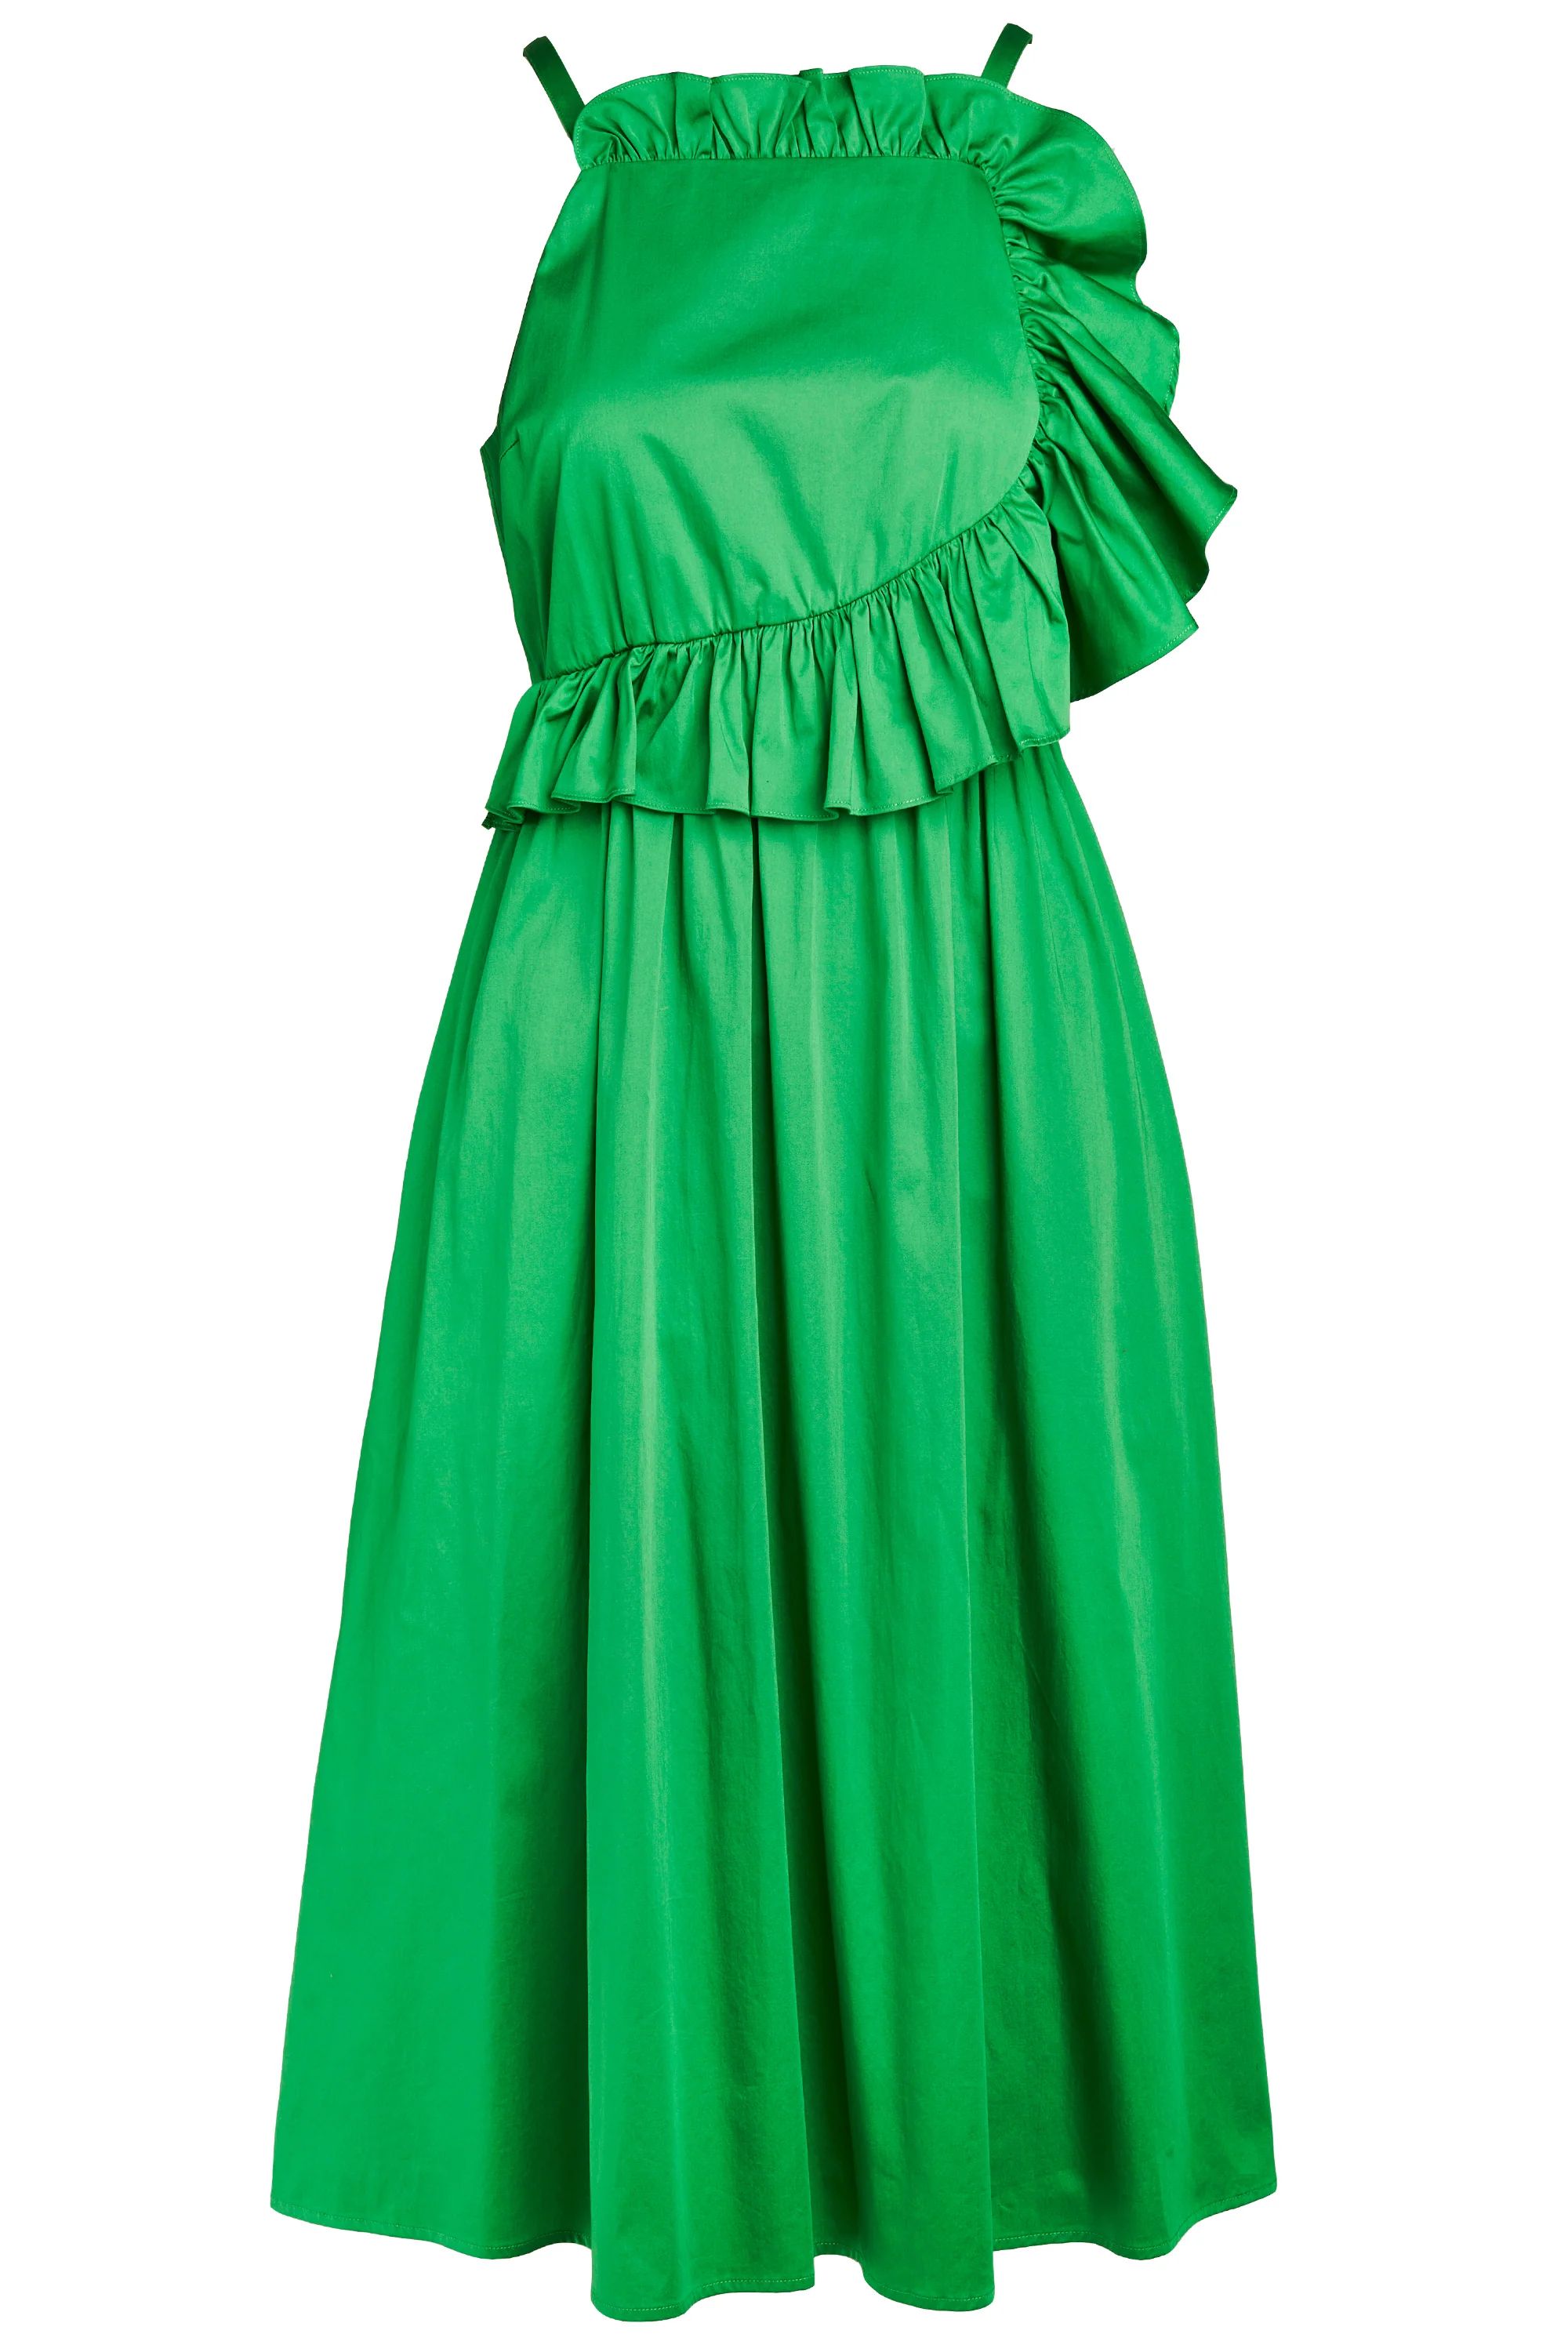 Genevieve Dress in Bright Fern - CROSBY by Mollie Burch | CROSBY by Mollie Burch